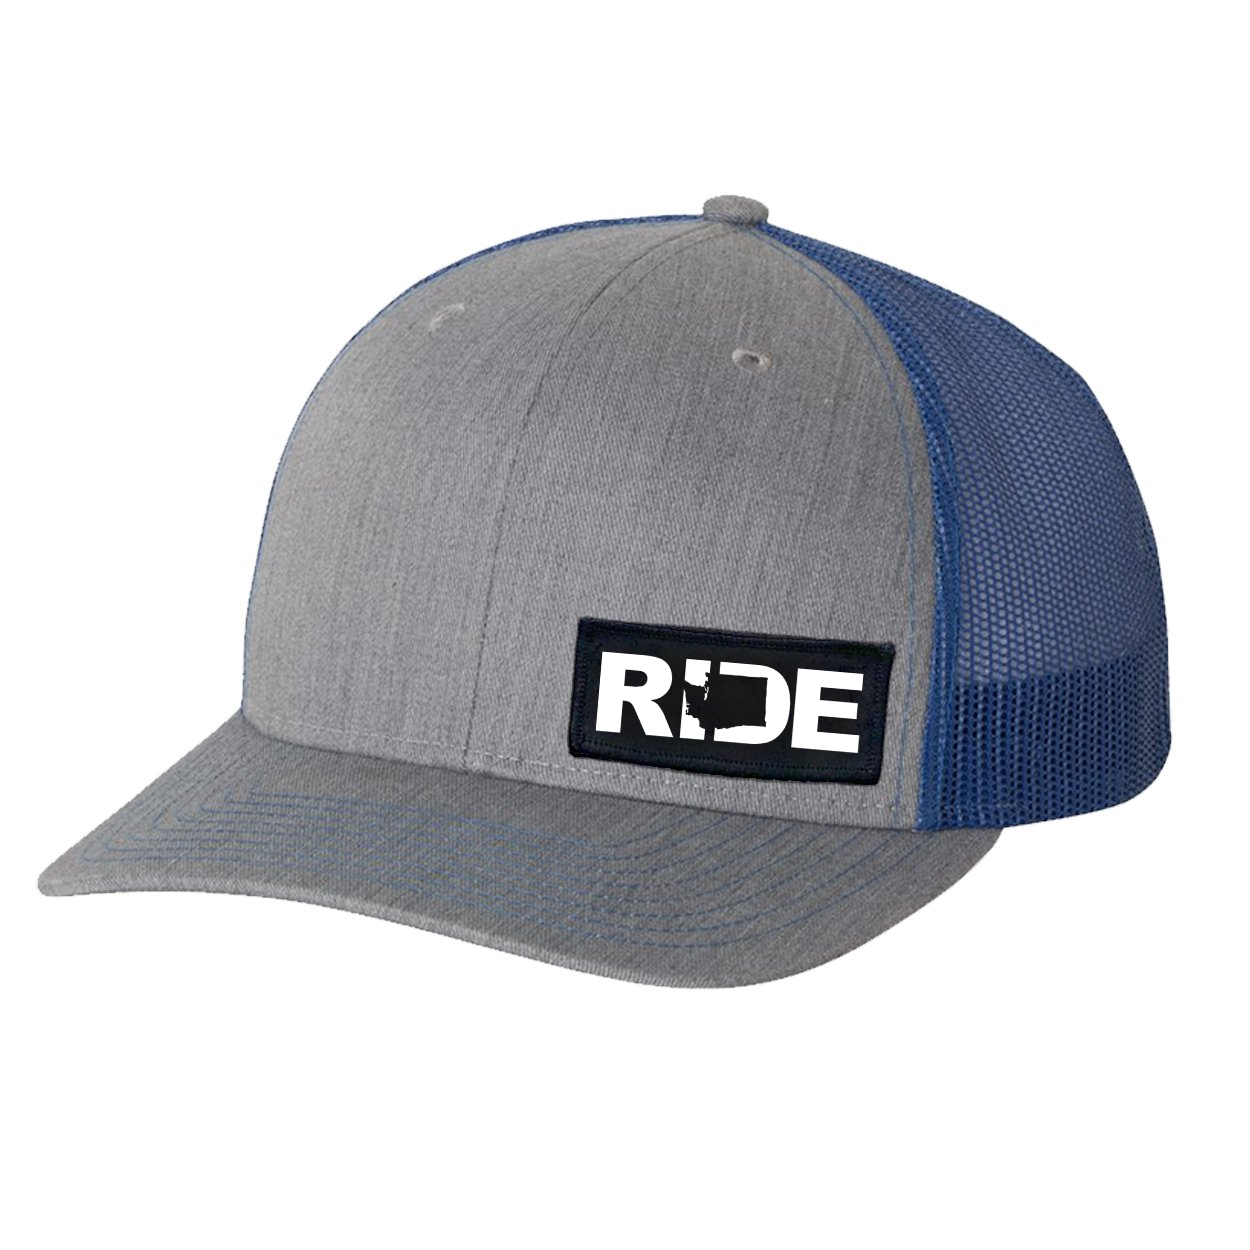 Ride Washington Night Out Woven Patch Snapback Trucker Hat Heather Grey/Royal (White Logo)